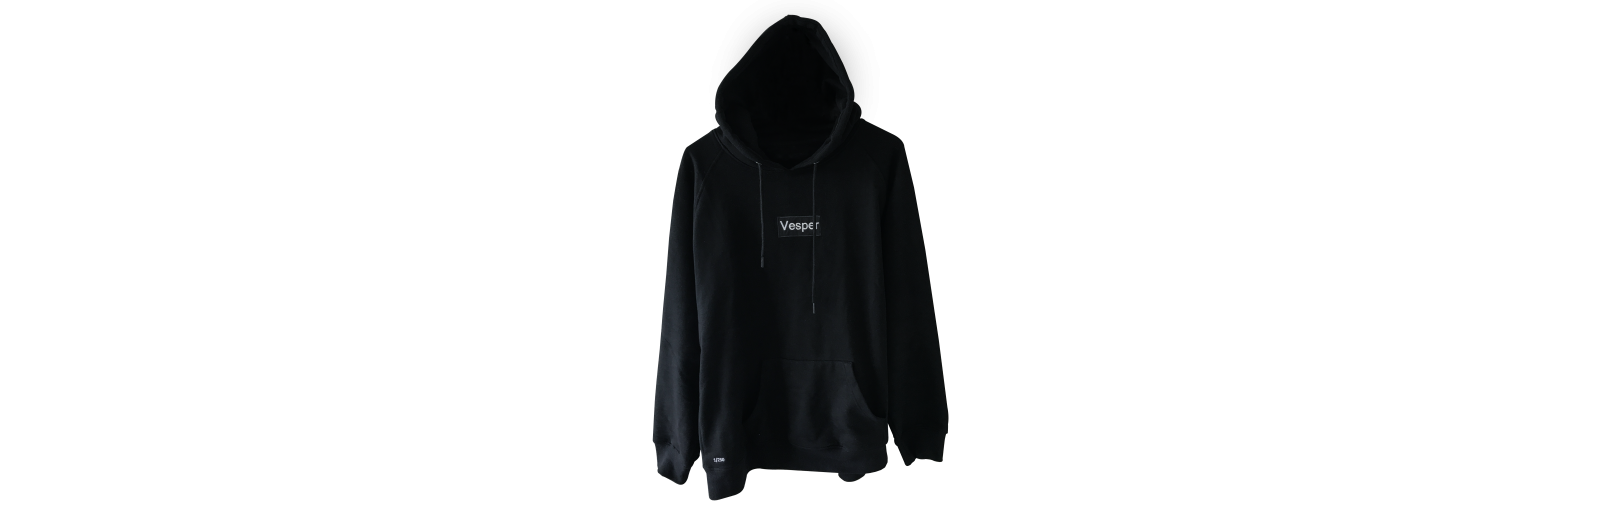 Another black hoodie 